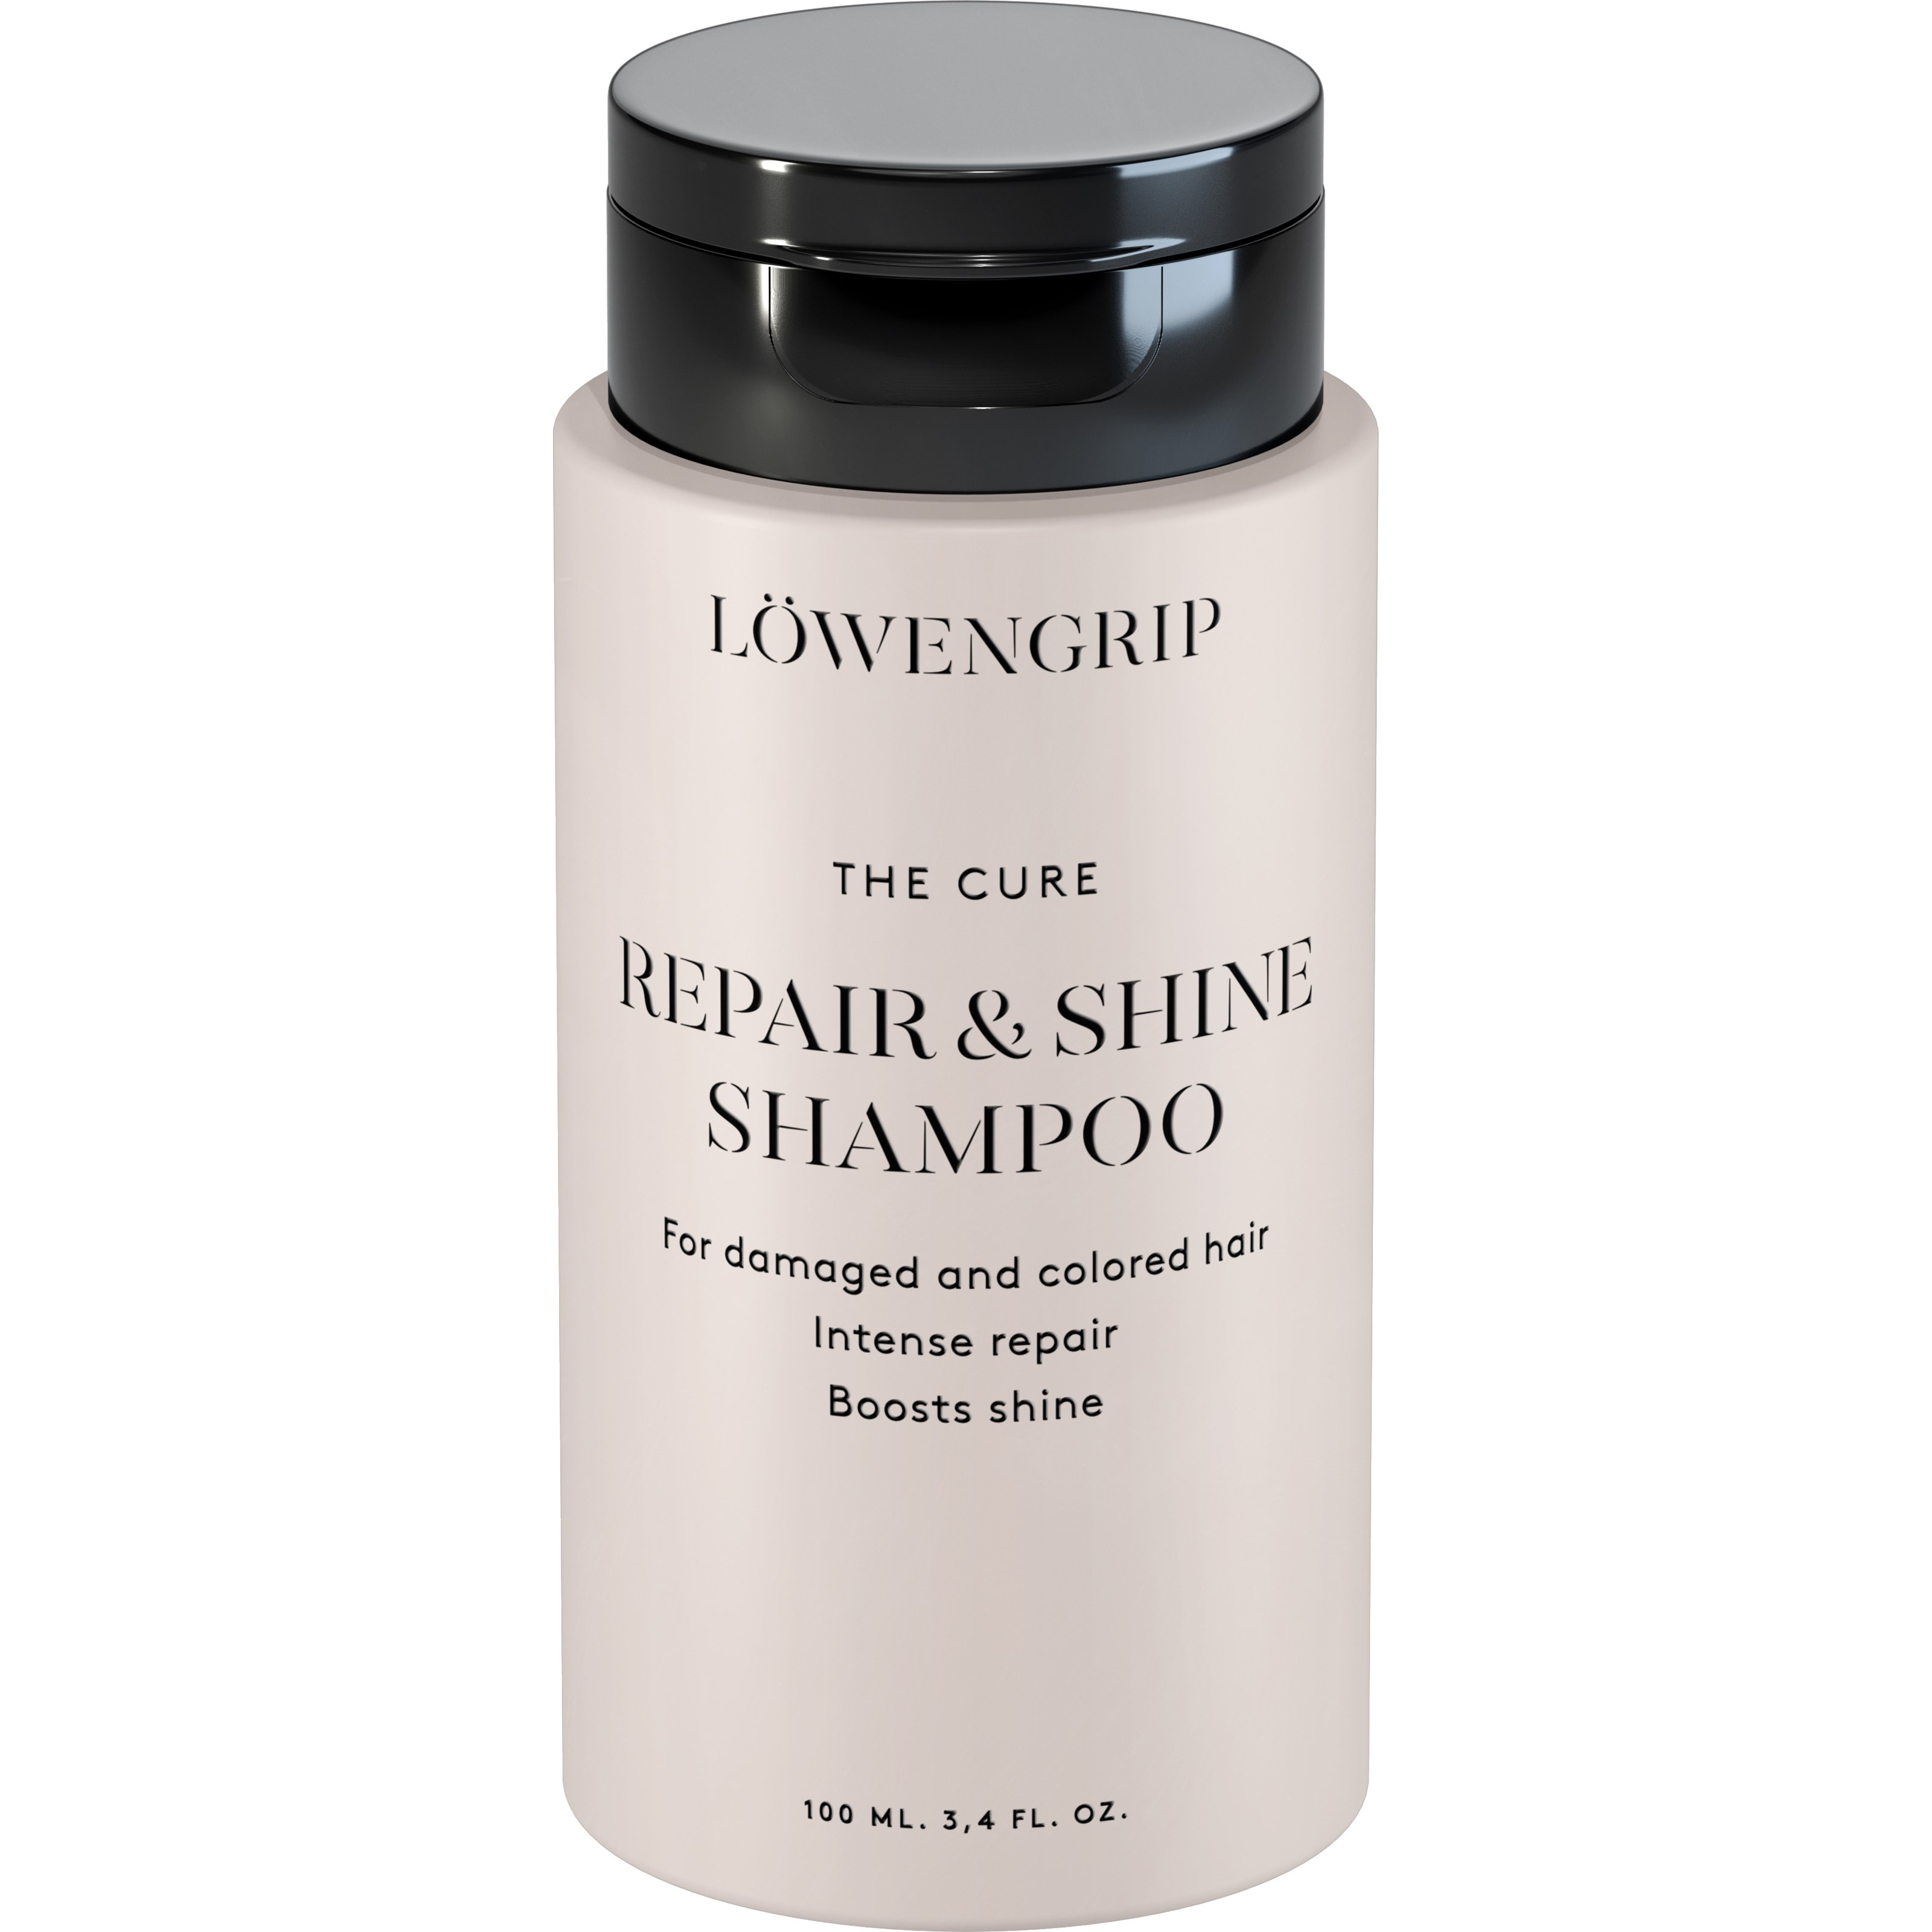 Löwengrip The Cure Repair & Shine Shampoo 100 ml